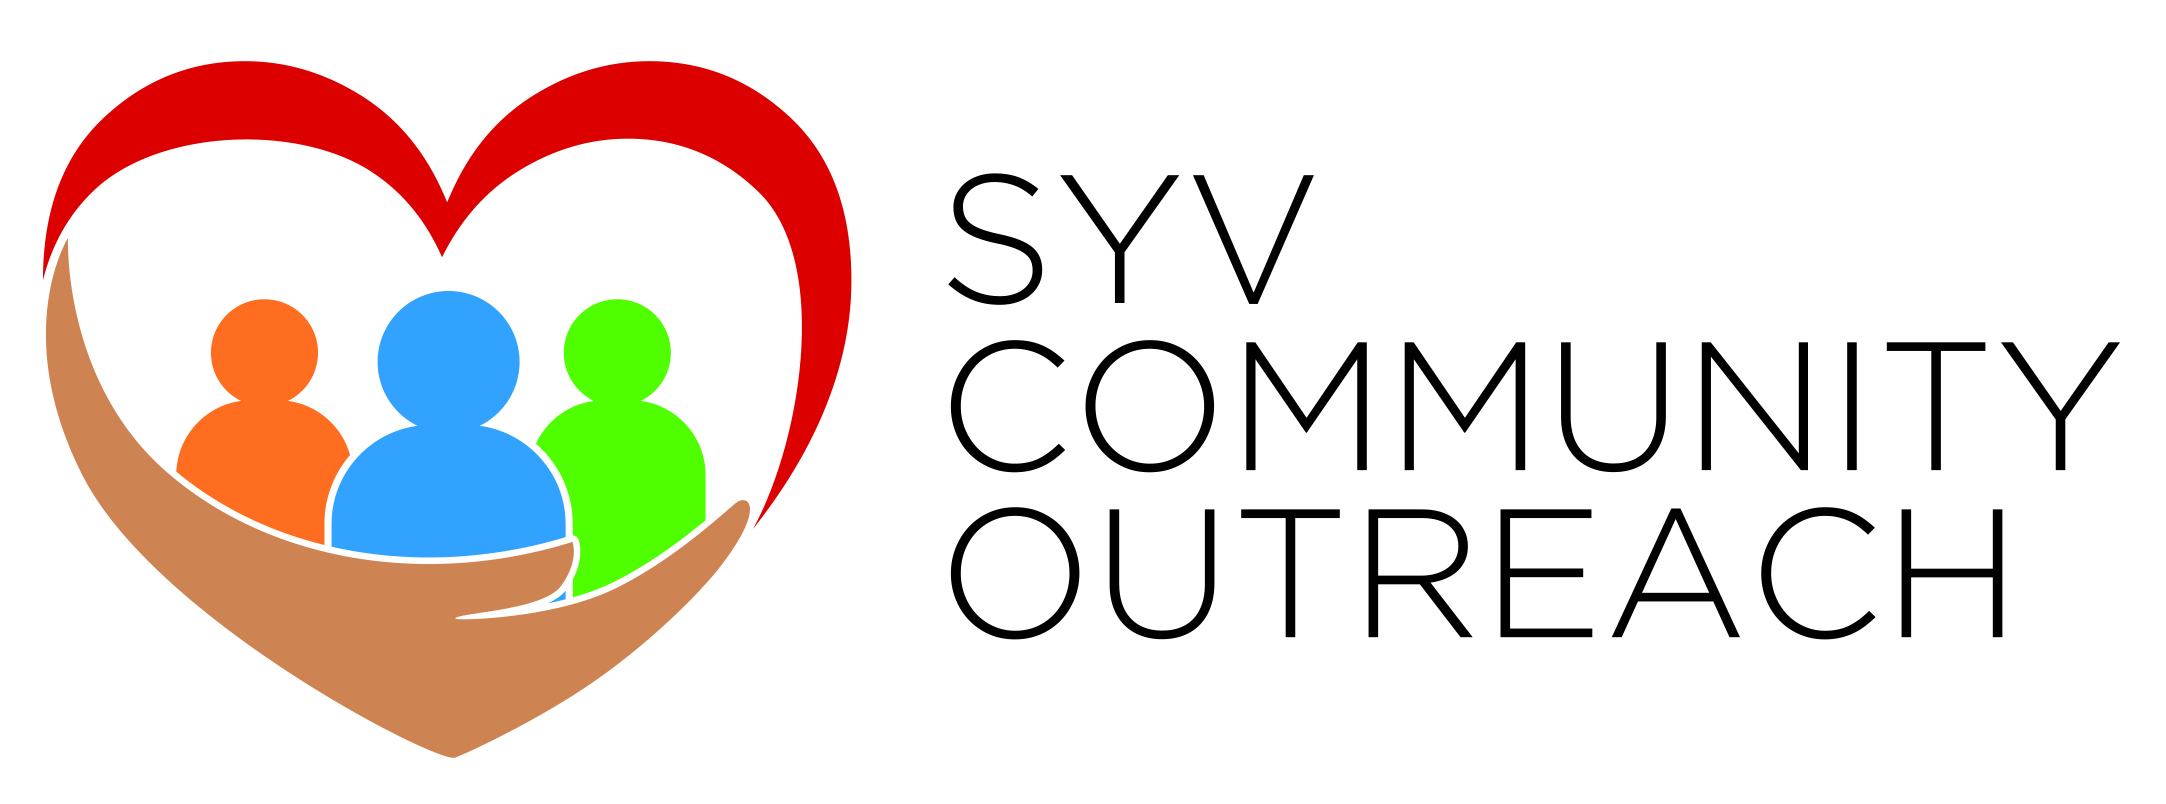 Buellton Senior Center/SYV Community Outreach 